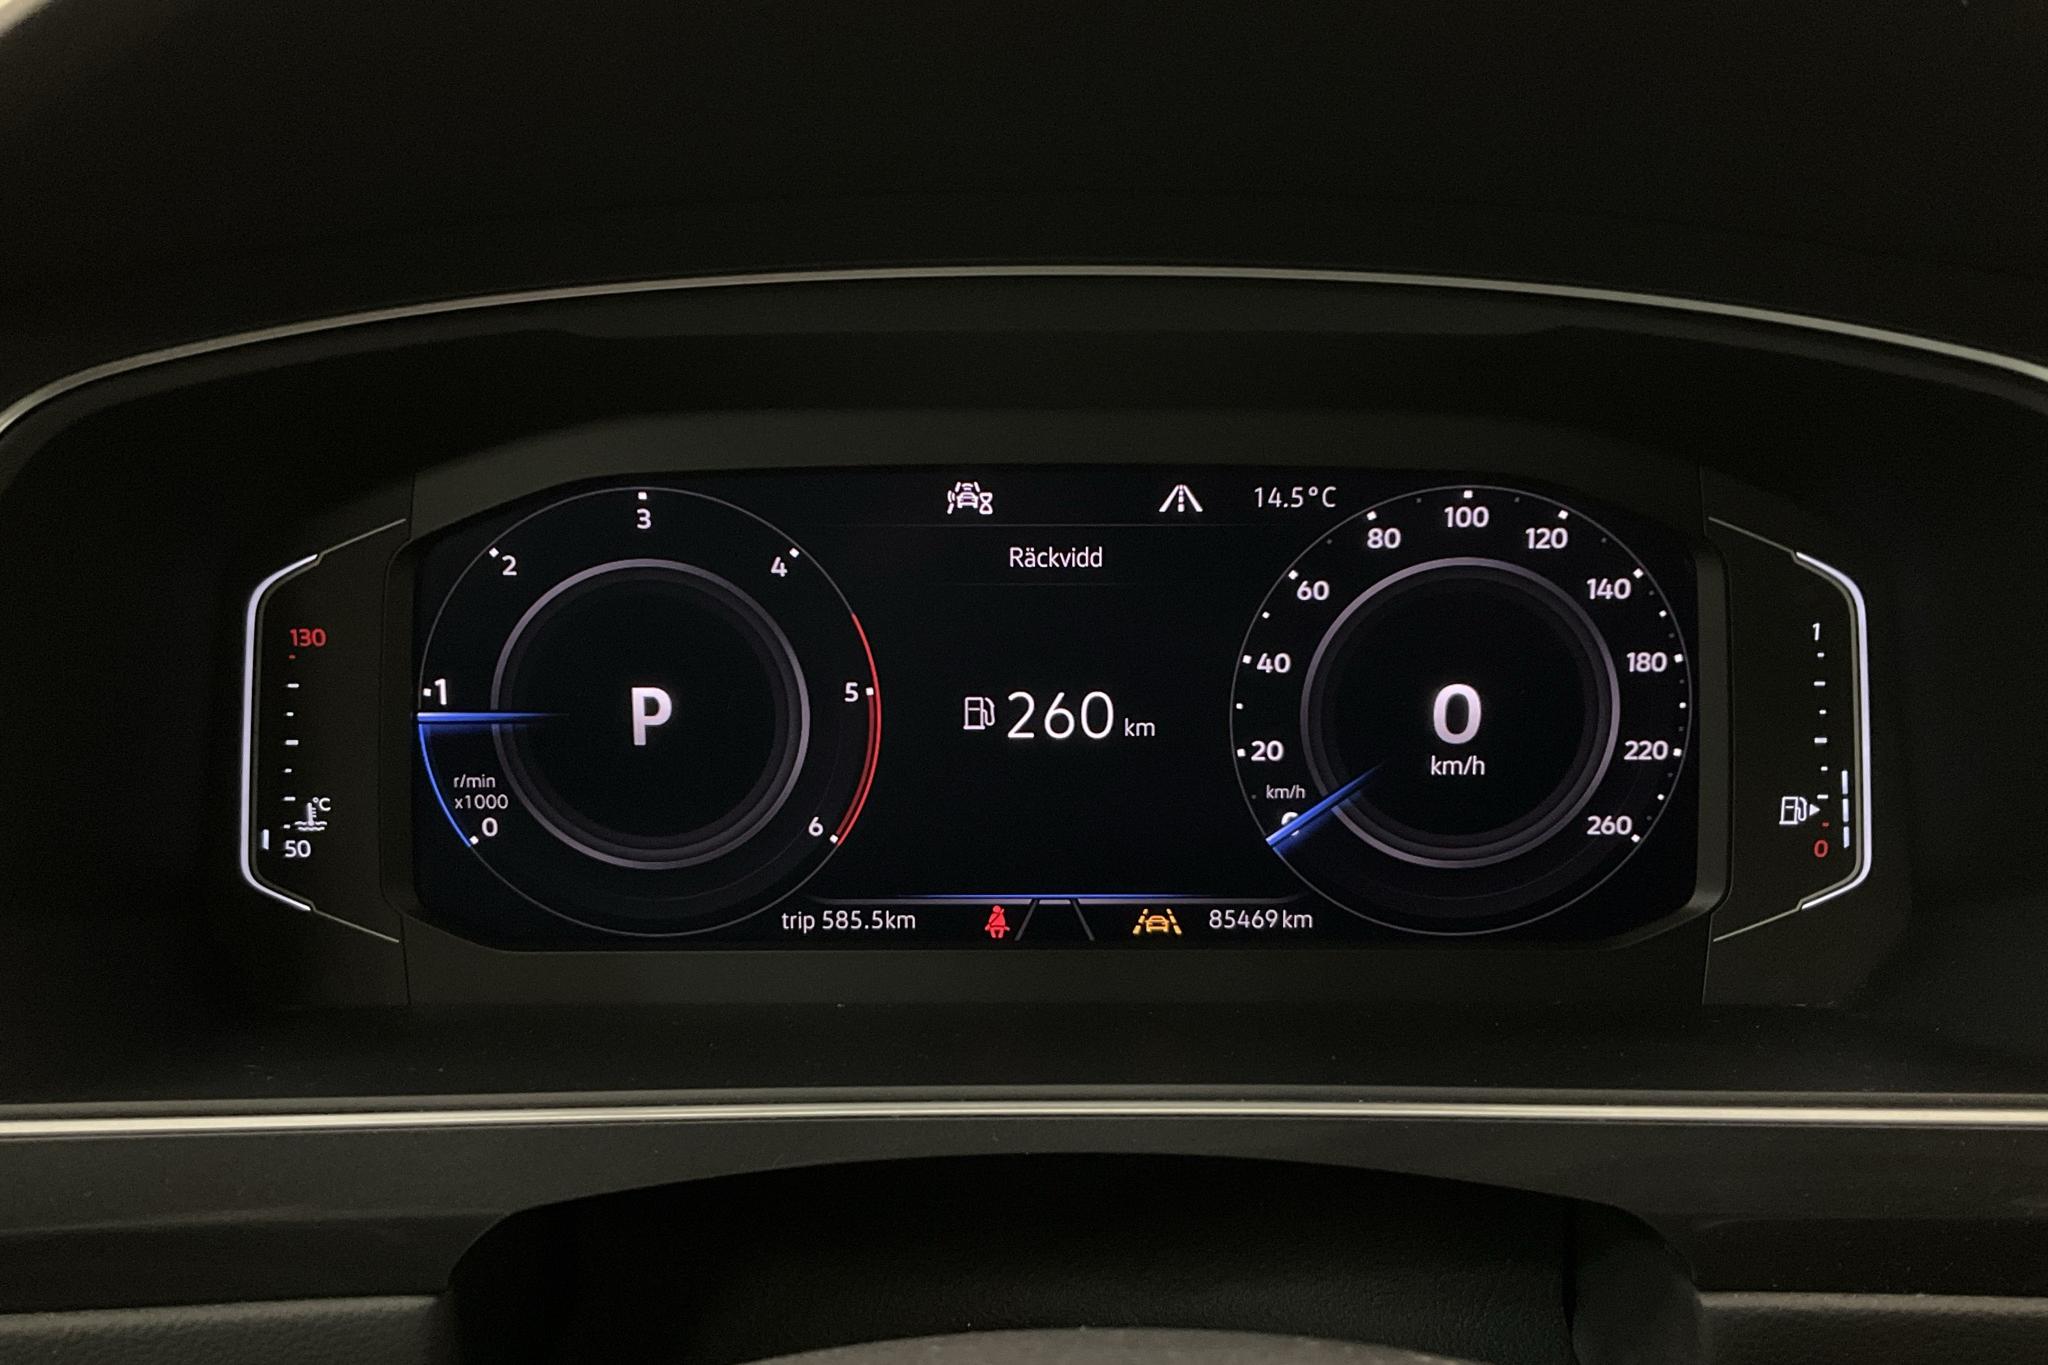 VW Tiguan 2.0 TDI 4MOTION (190hk) - 8 547 mil - Automat - vit - 2020